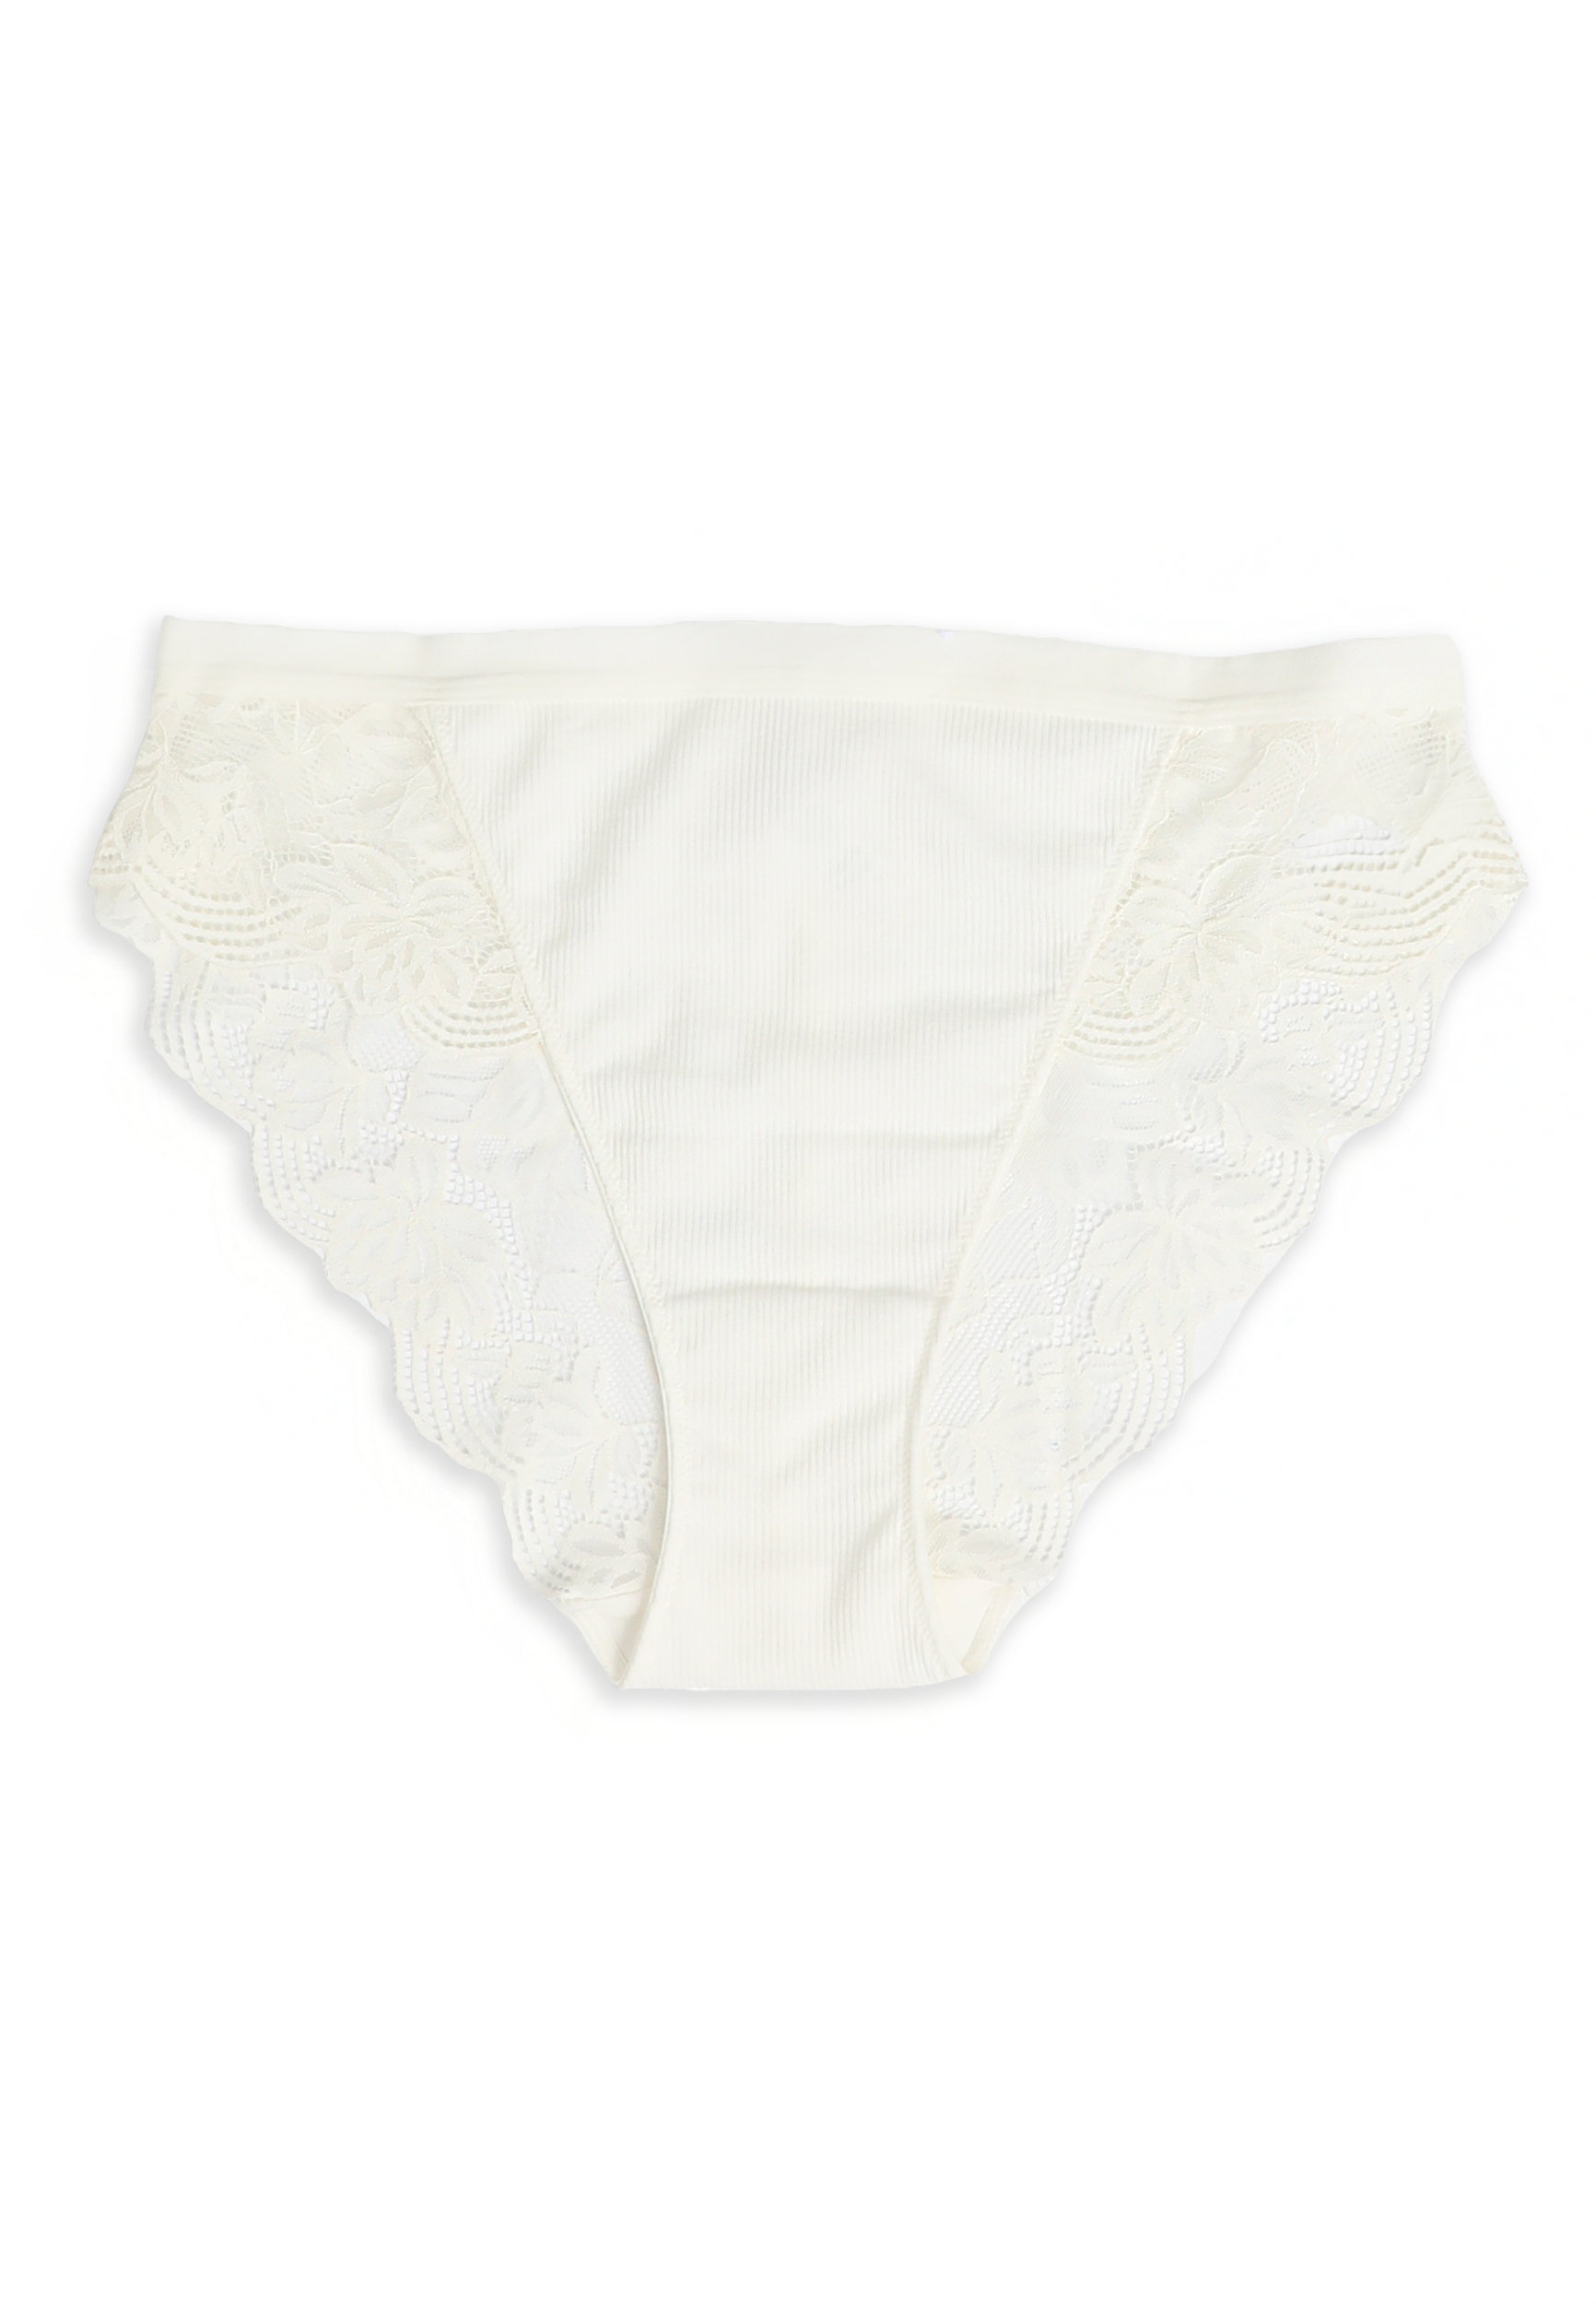 Women's Panties for sale in Mount Morris, Michigan